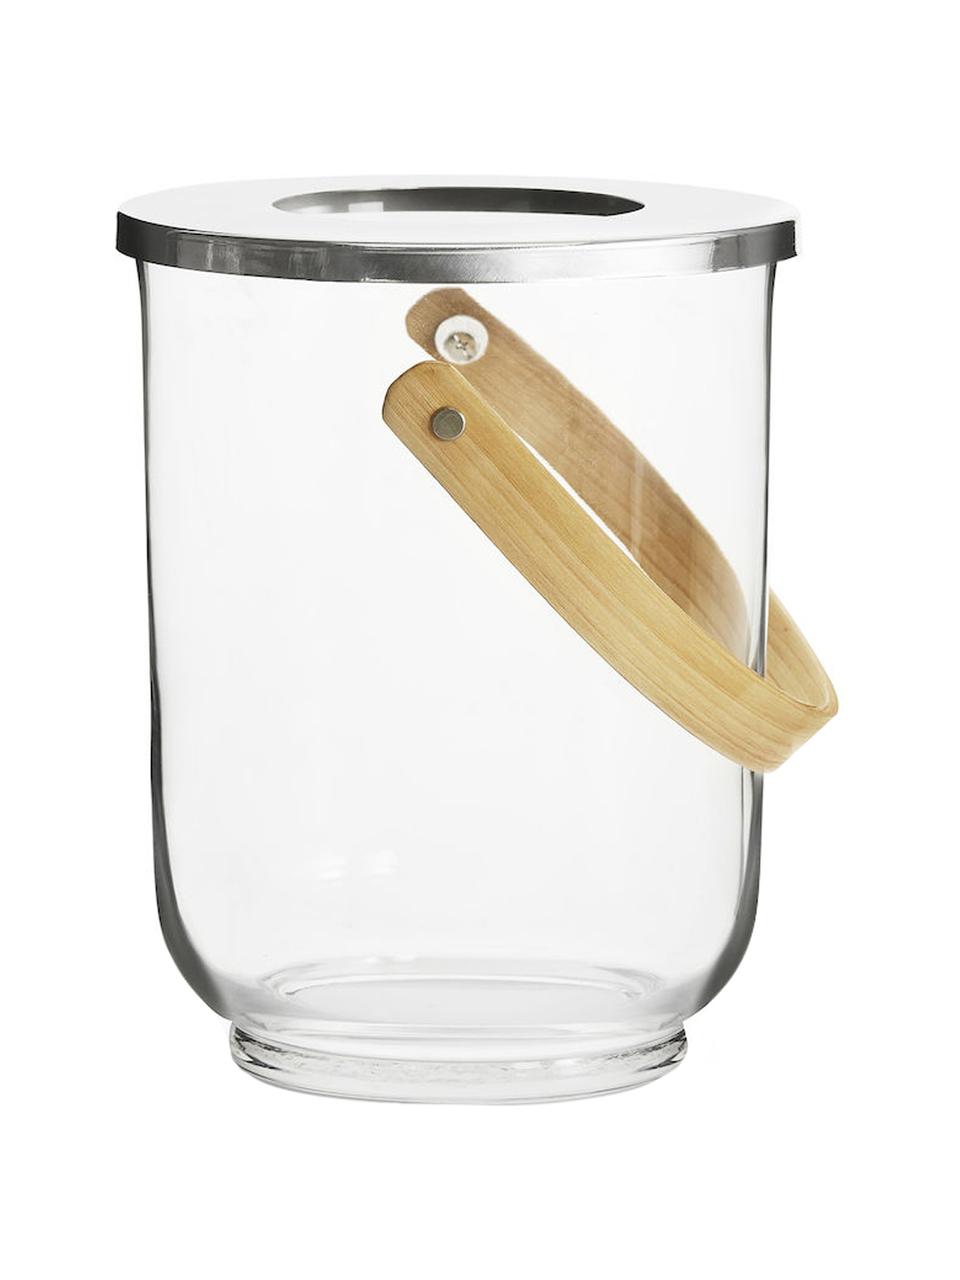 Windlicht Raphaela van glas, Windlicht: glas, metaal, Transparant, zilverkleurig, bamboe, Ø 19 x H 23 cm